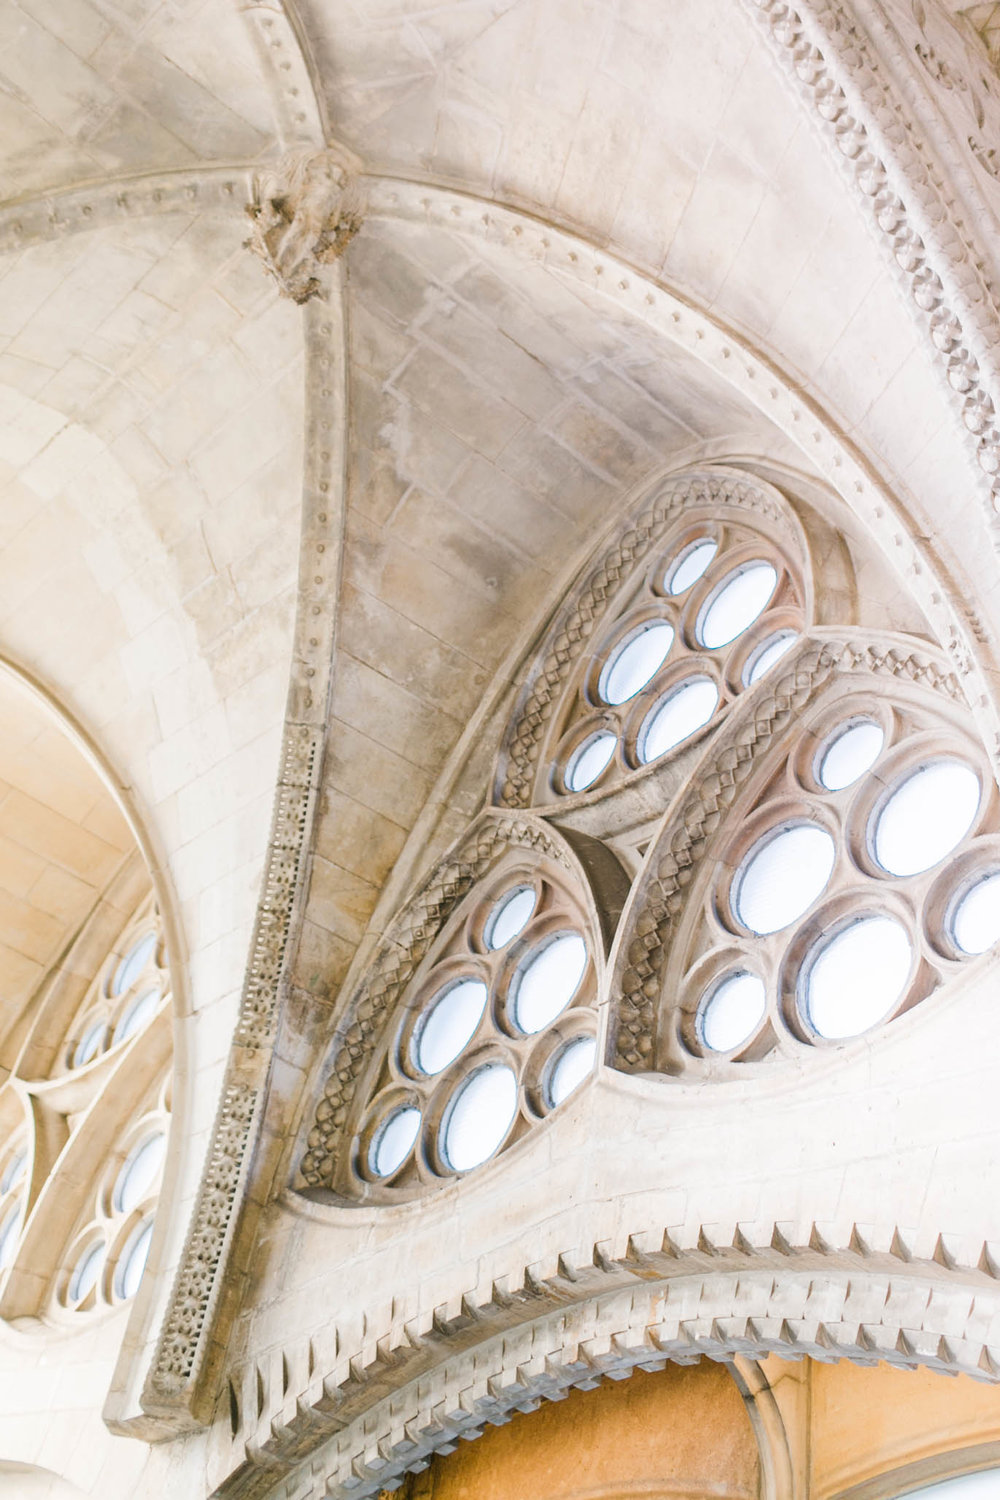 Just a few details of the interior space of Sagrada Familia.